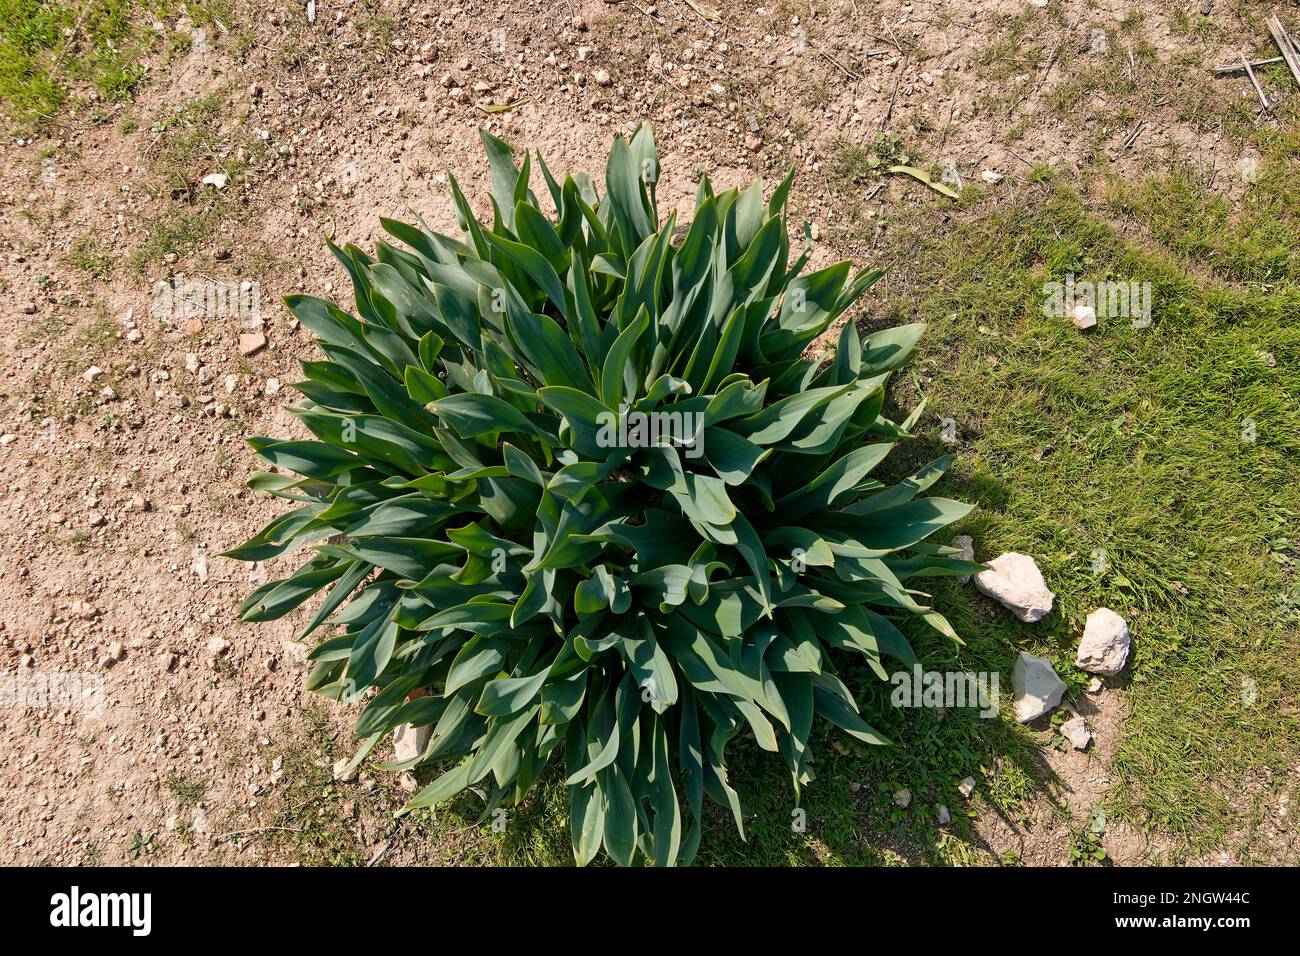 A Bellevalia plant in the ancient Greco-Roman city of Jerash, Jordan. Credit: MLBARIONA/Alamy Stock Photo Stock Photo